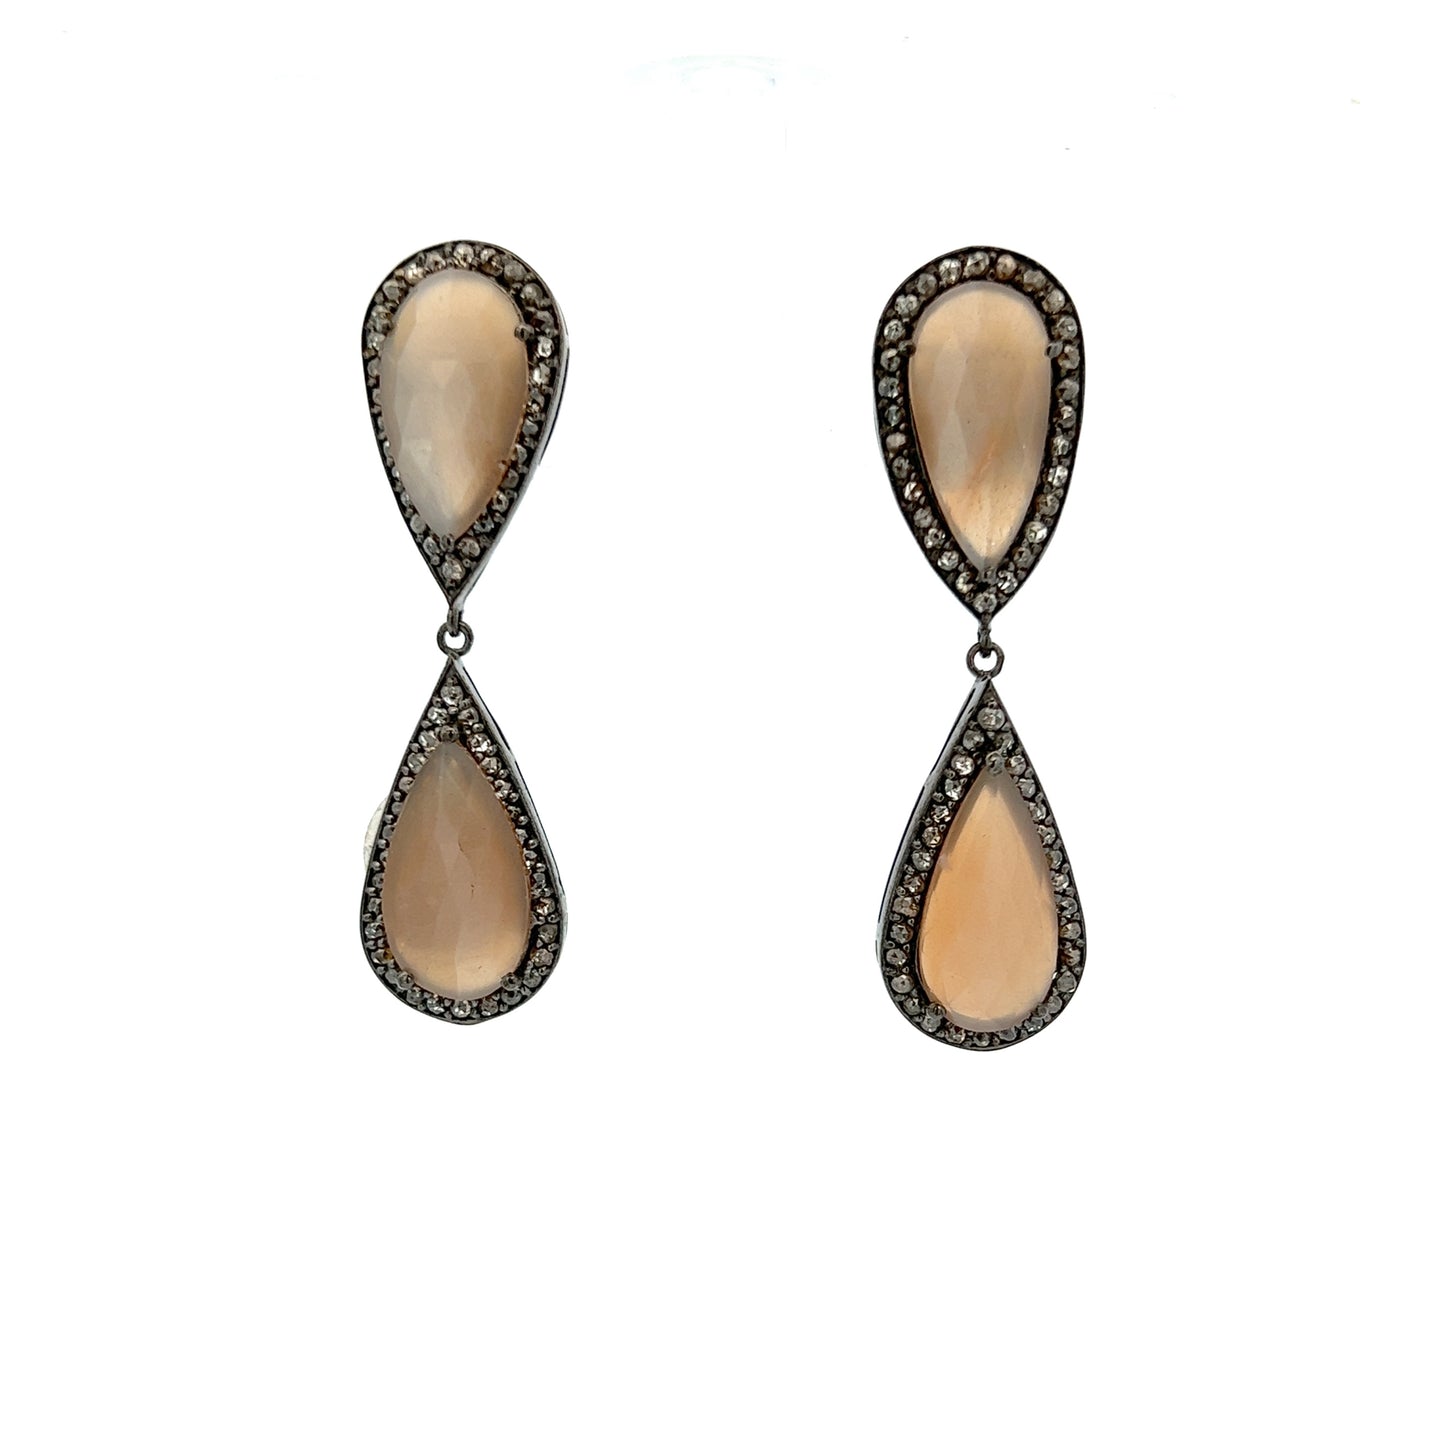 Moonstone & Diamond Earrings